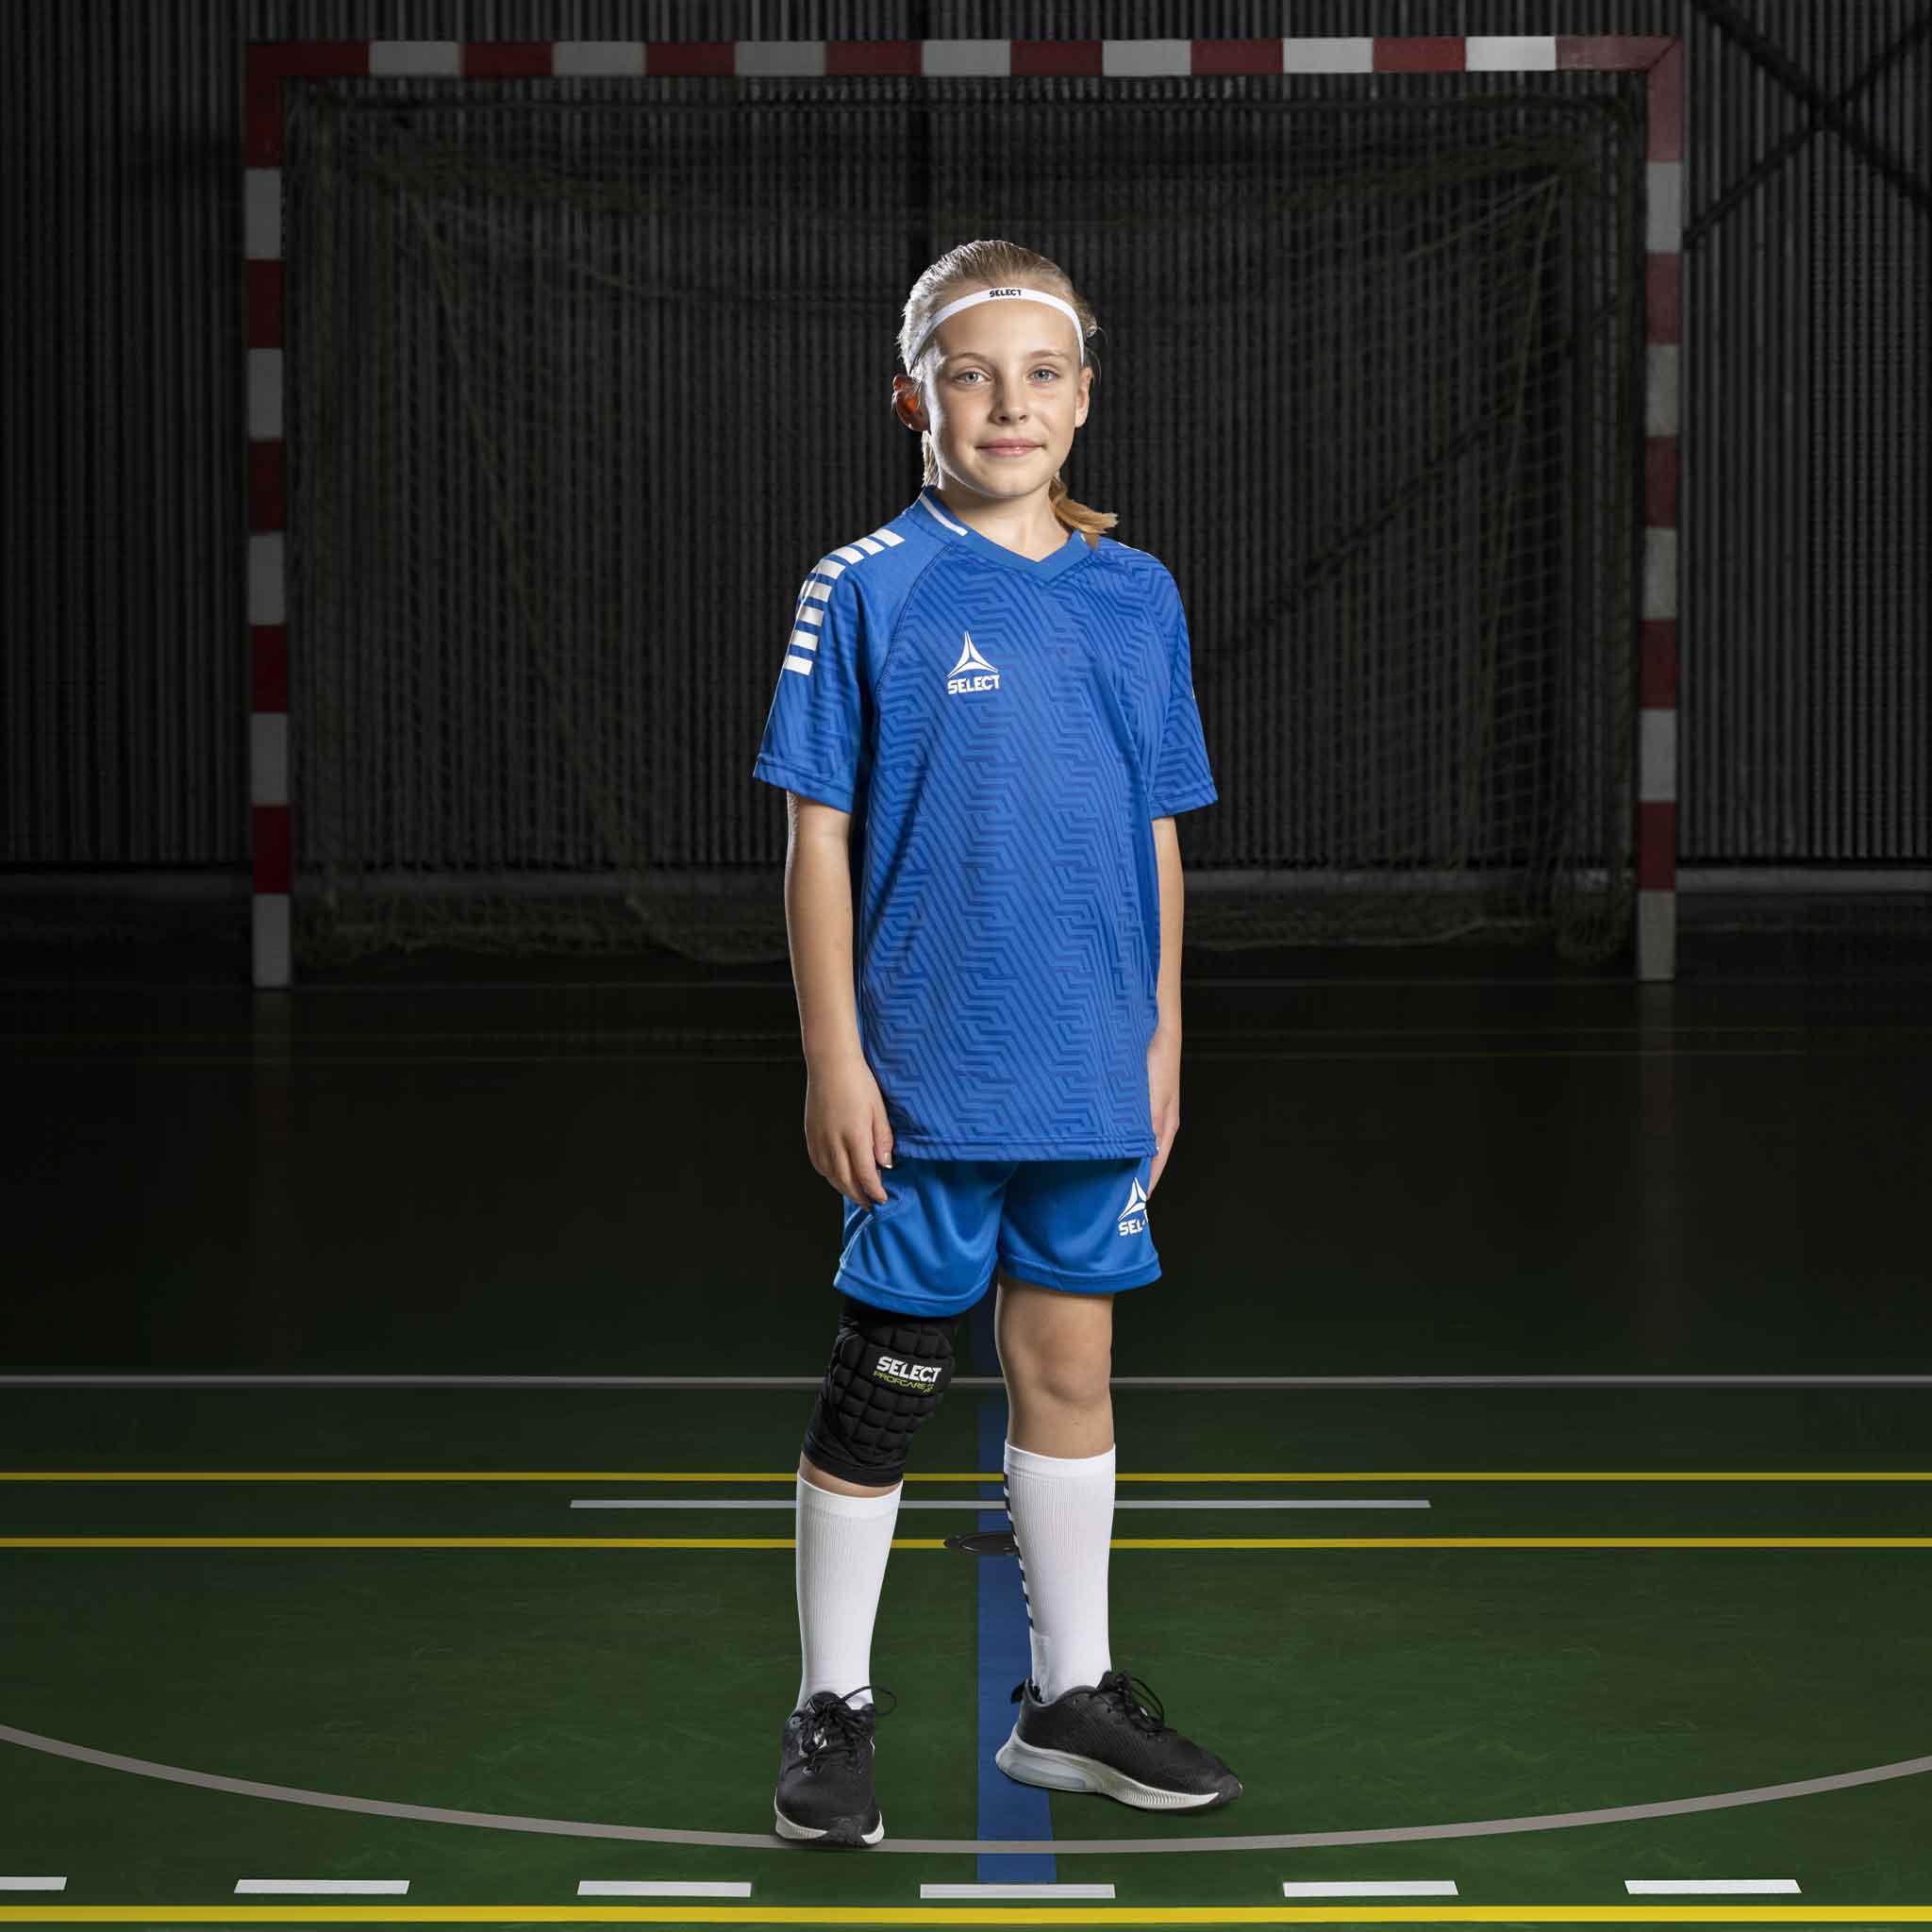 Monaco Player shorts - Kids #colour_blue/white